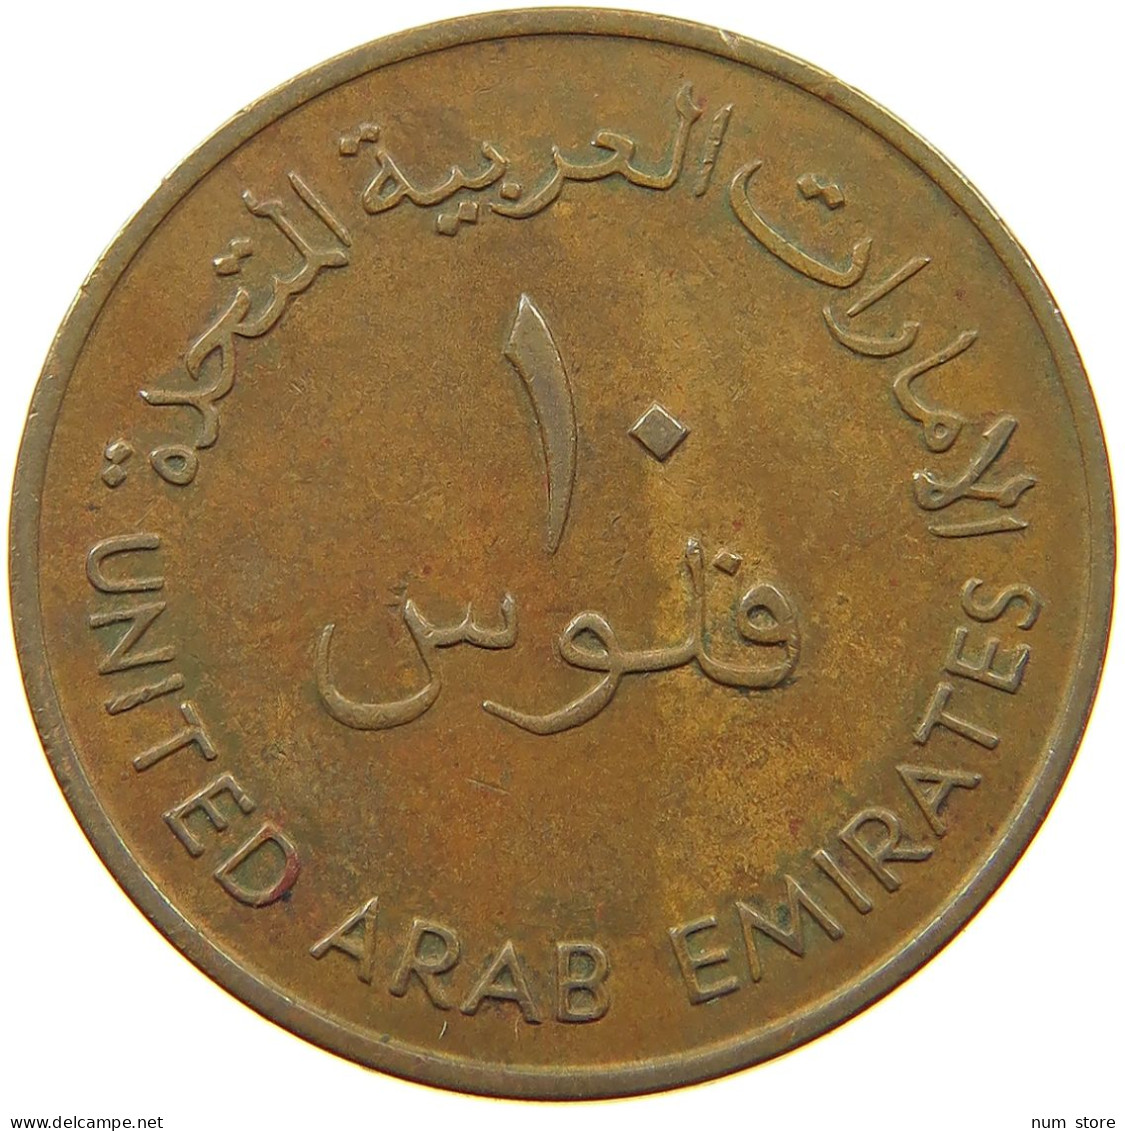 UNITED ARAB EMIRATES 10 FILS 1973  #a037 0619 - United Arab Emirates